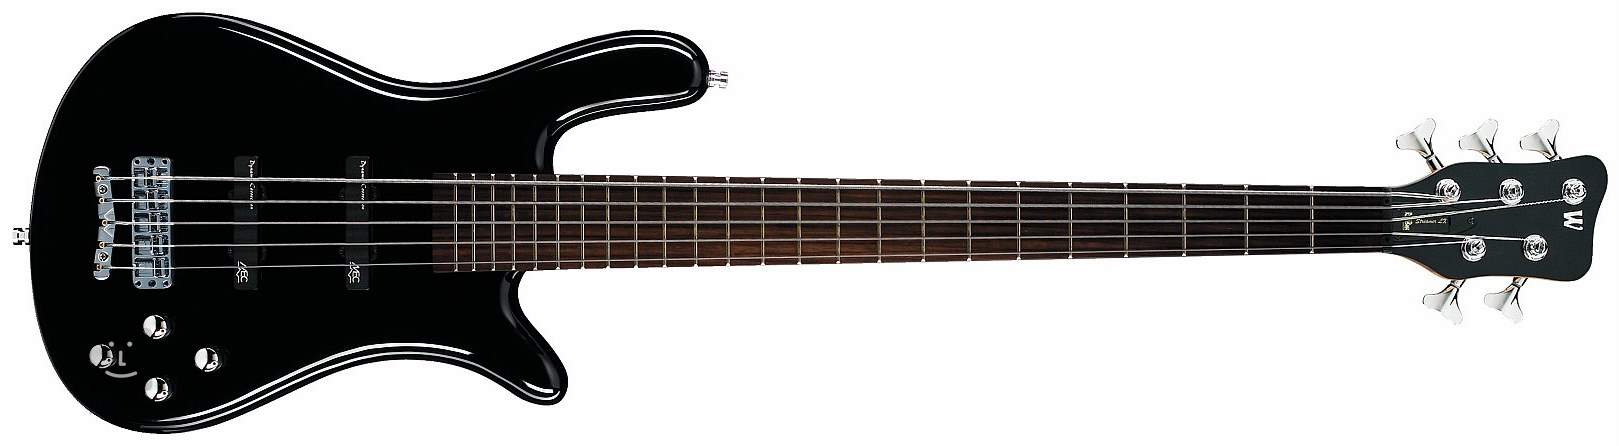 WARWICK RB Streamer LX Electric Bass Guitar